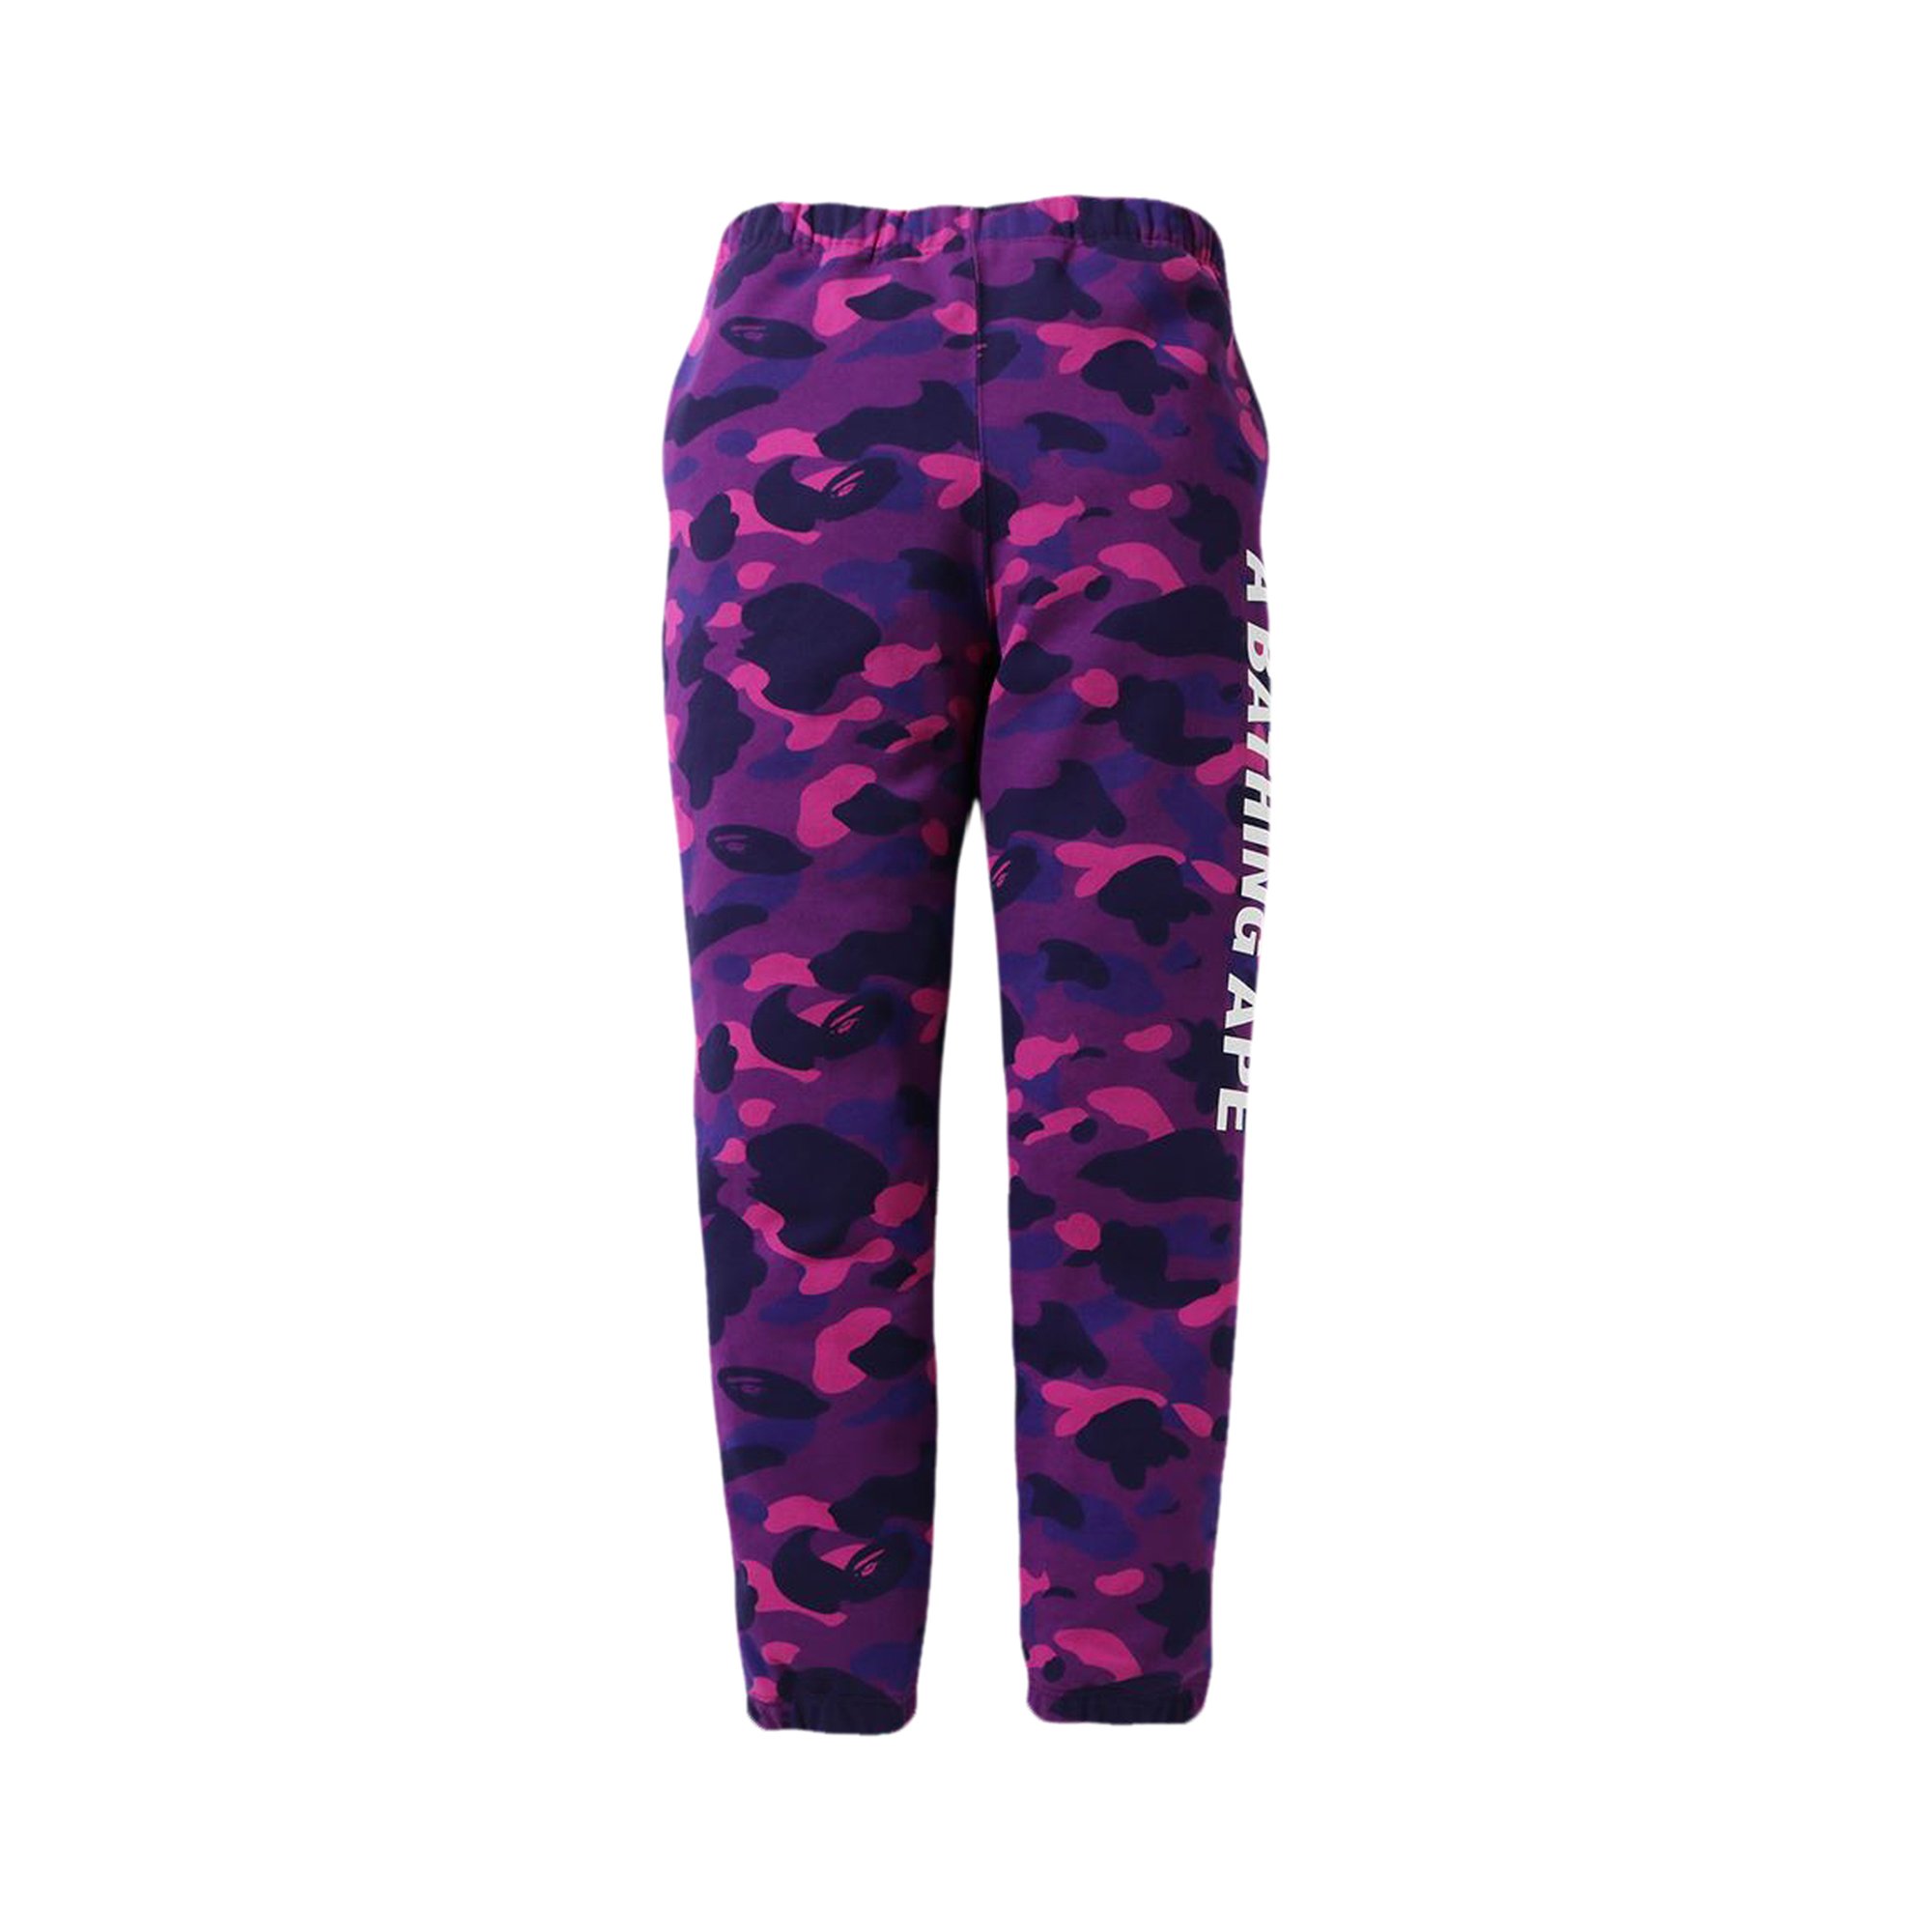 Buy BAPE Color Camo Sweat Pants 'Purple' - 1G80 152 021 PURPLE | GOAT